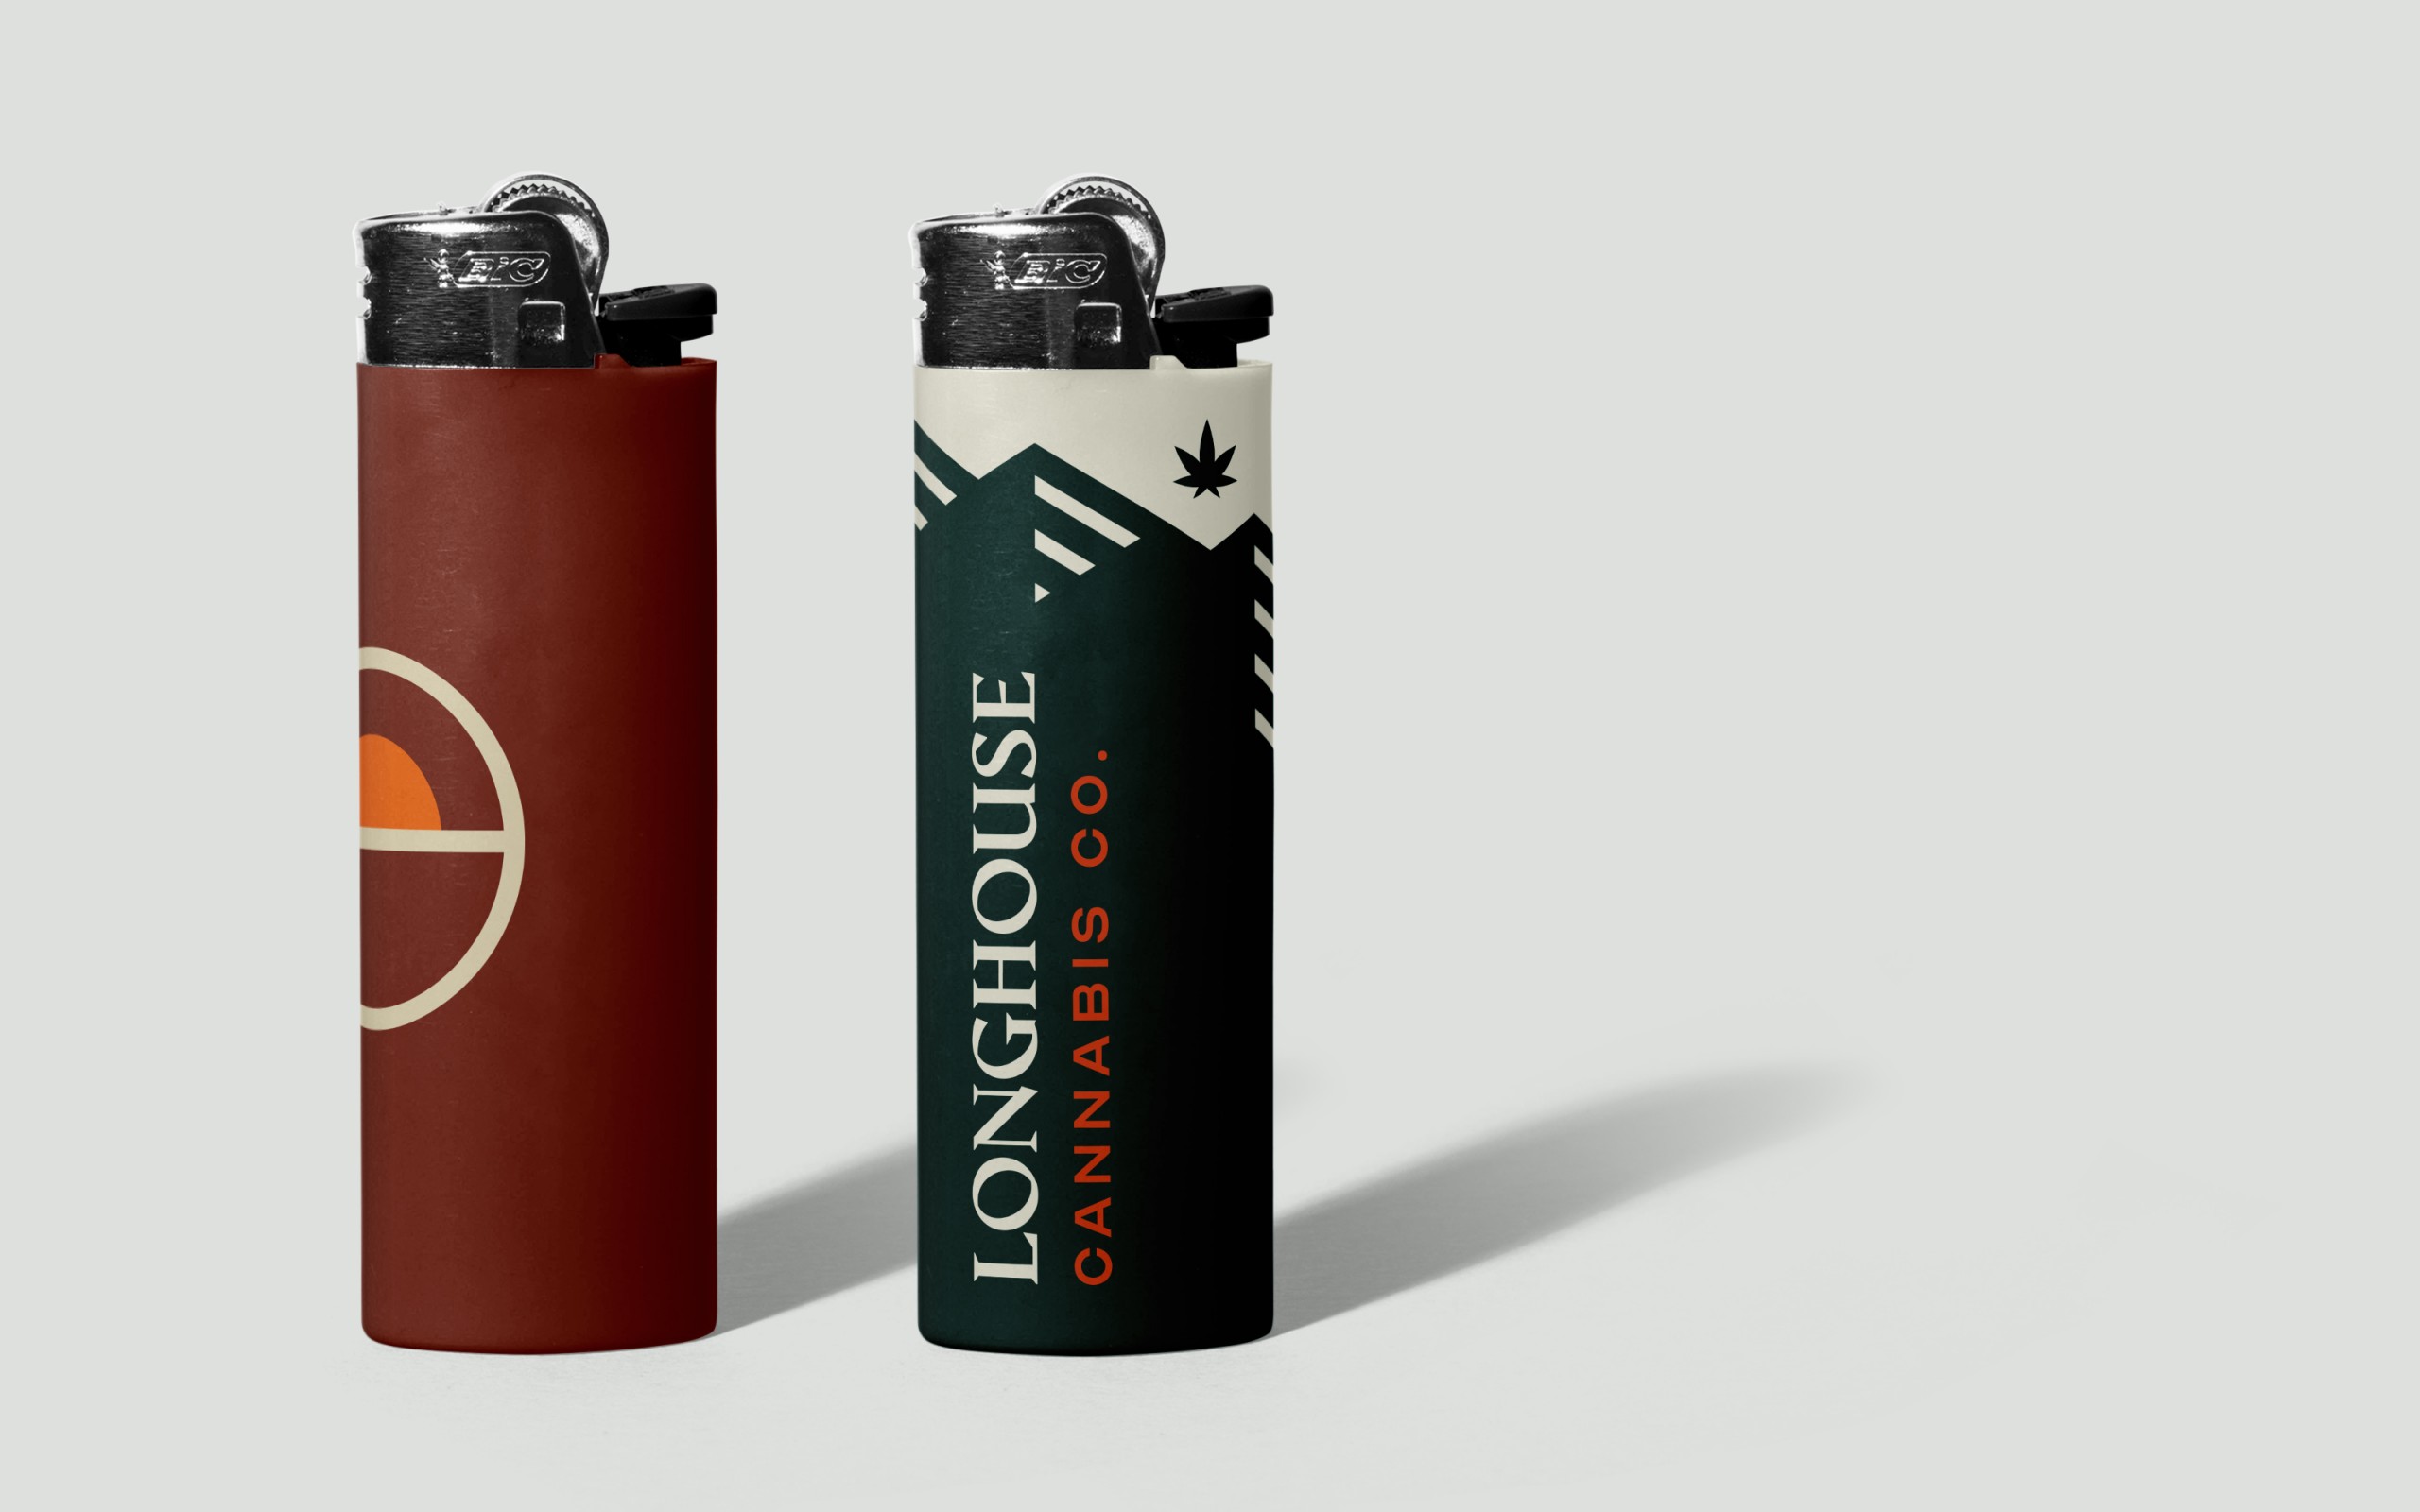 Mockups of the brand on plastic lighters.